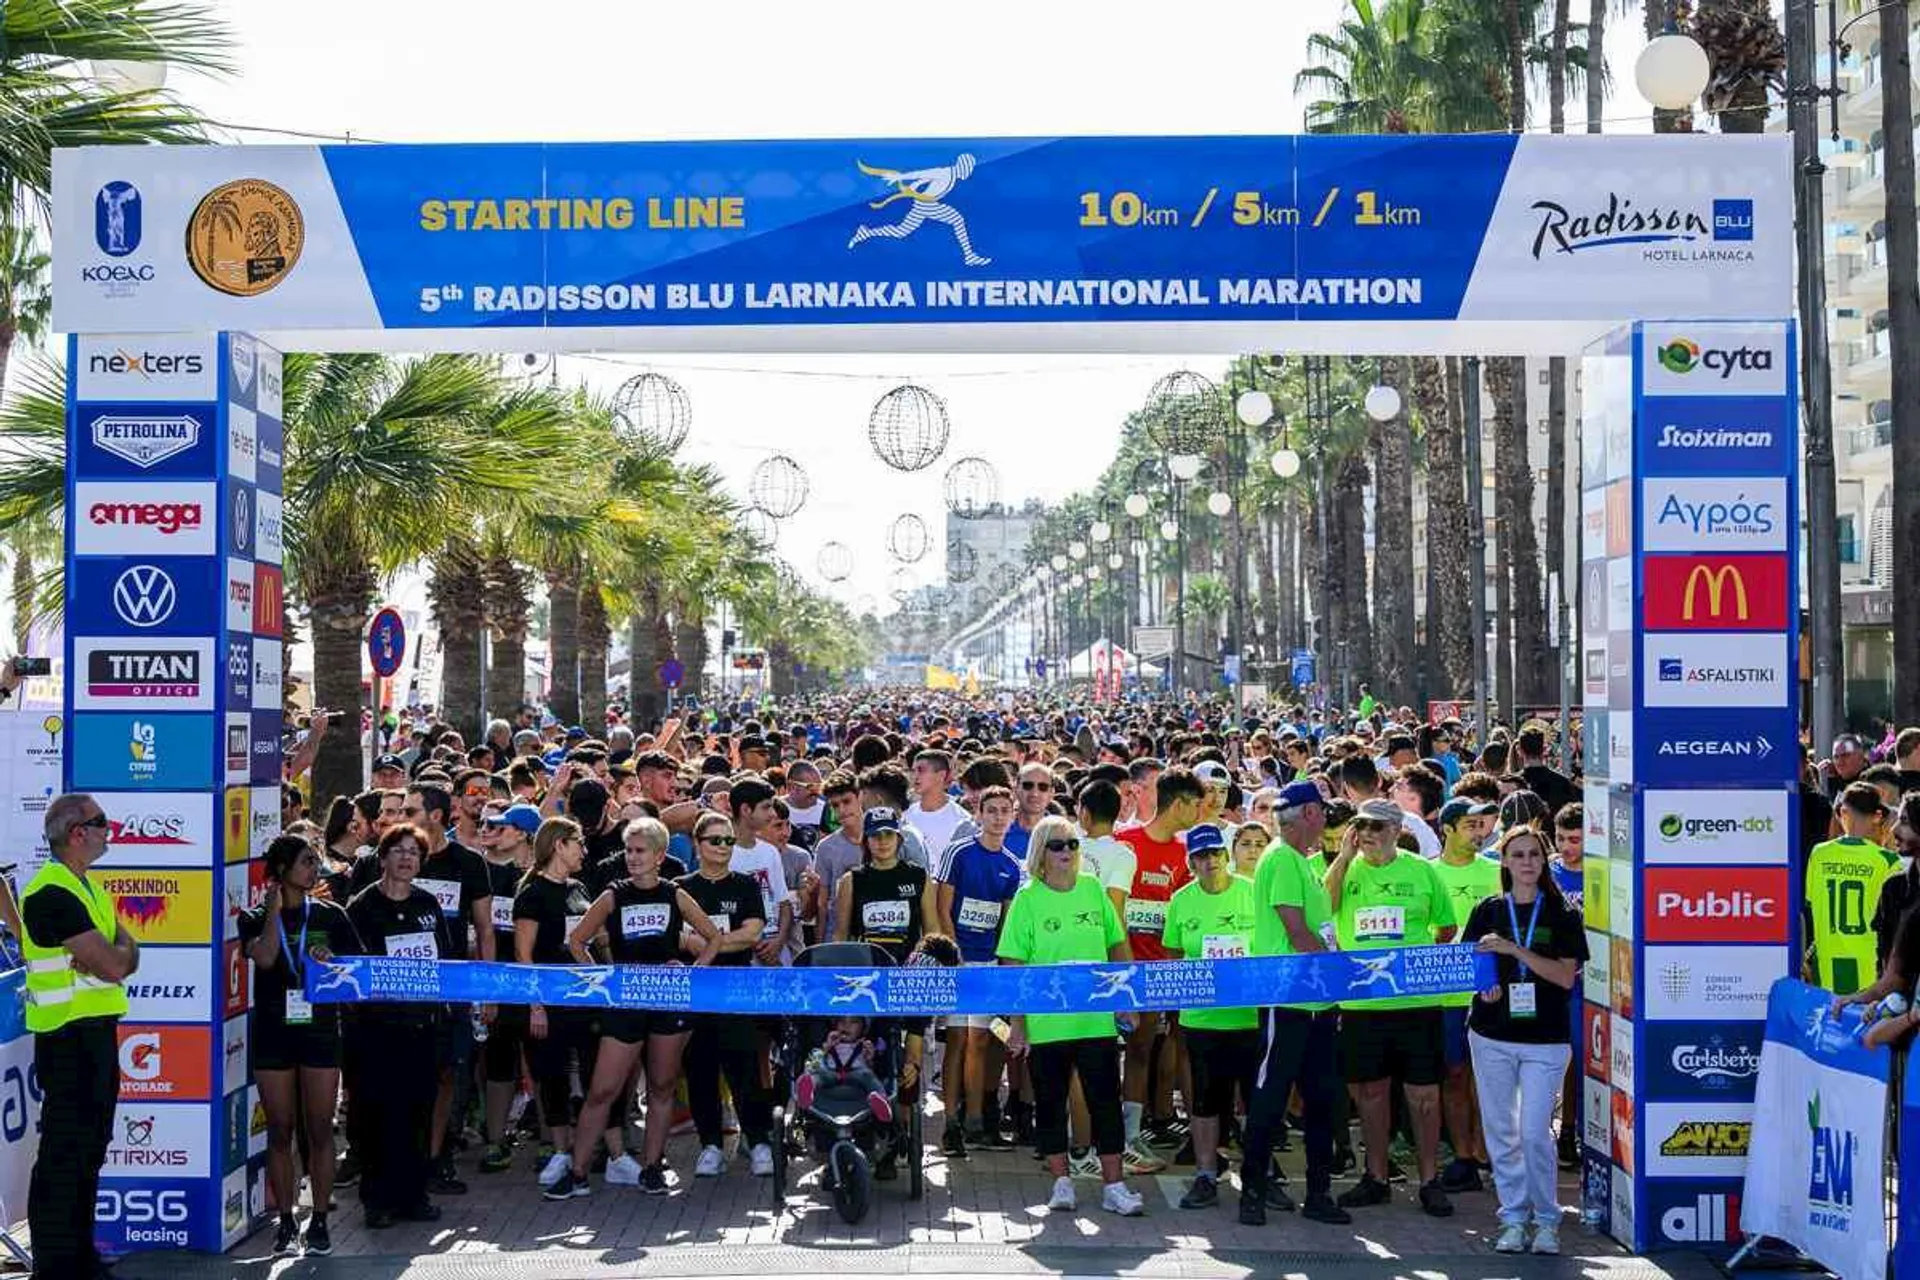 Radisson BLU Larnaka International Marathon